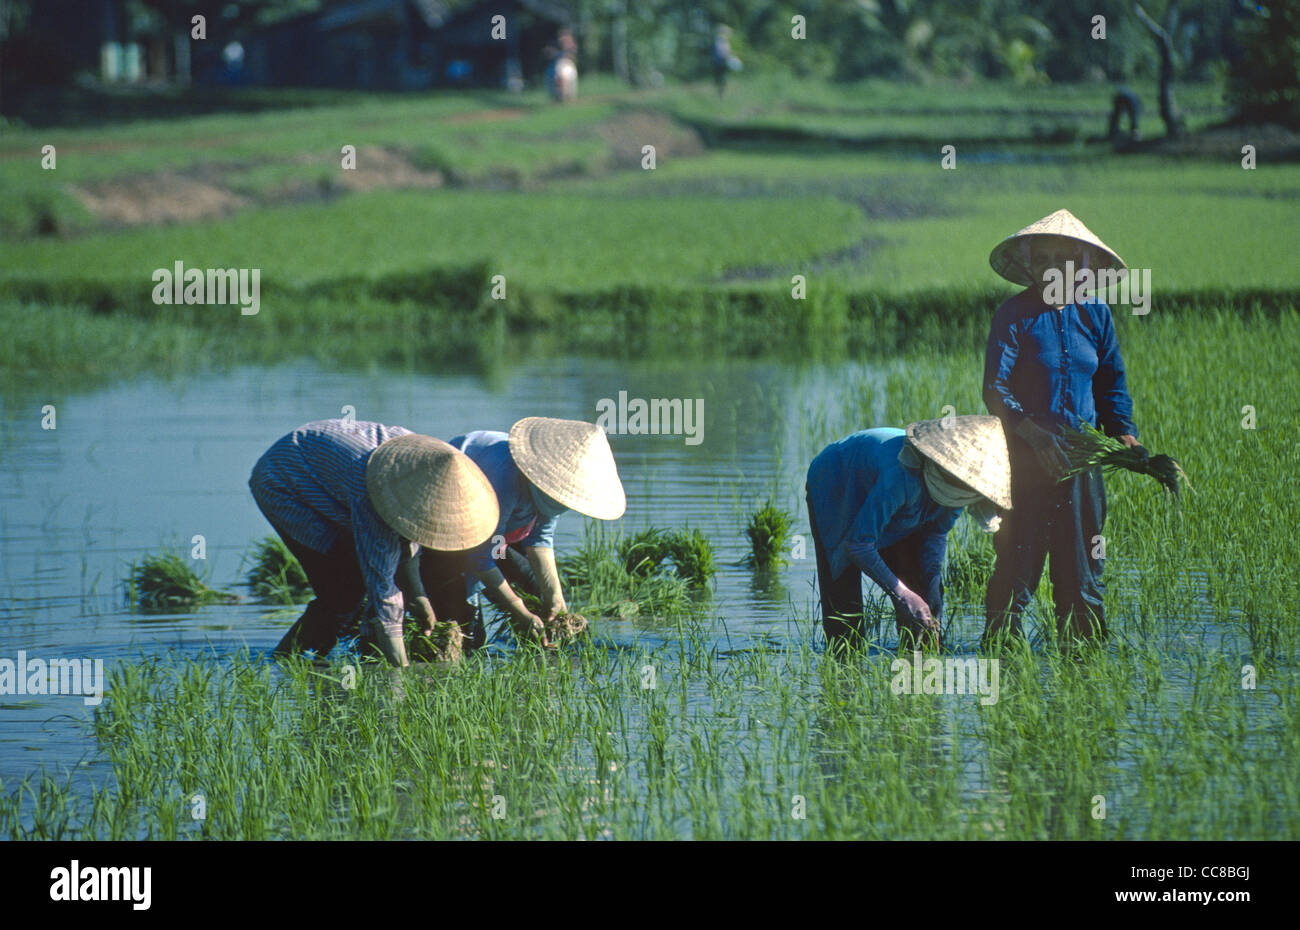 Four women planting in paddy field Mekong Delta Vietnam Stock Photo